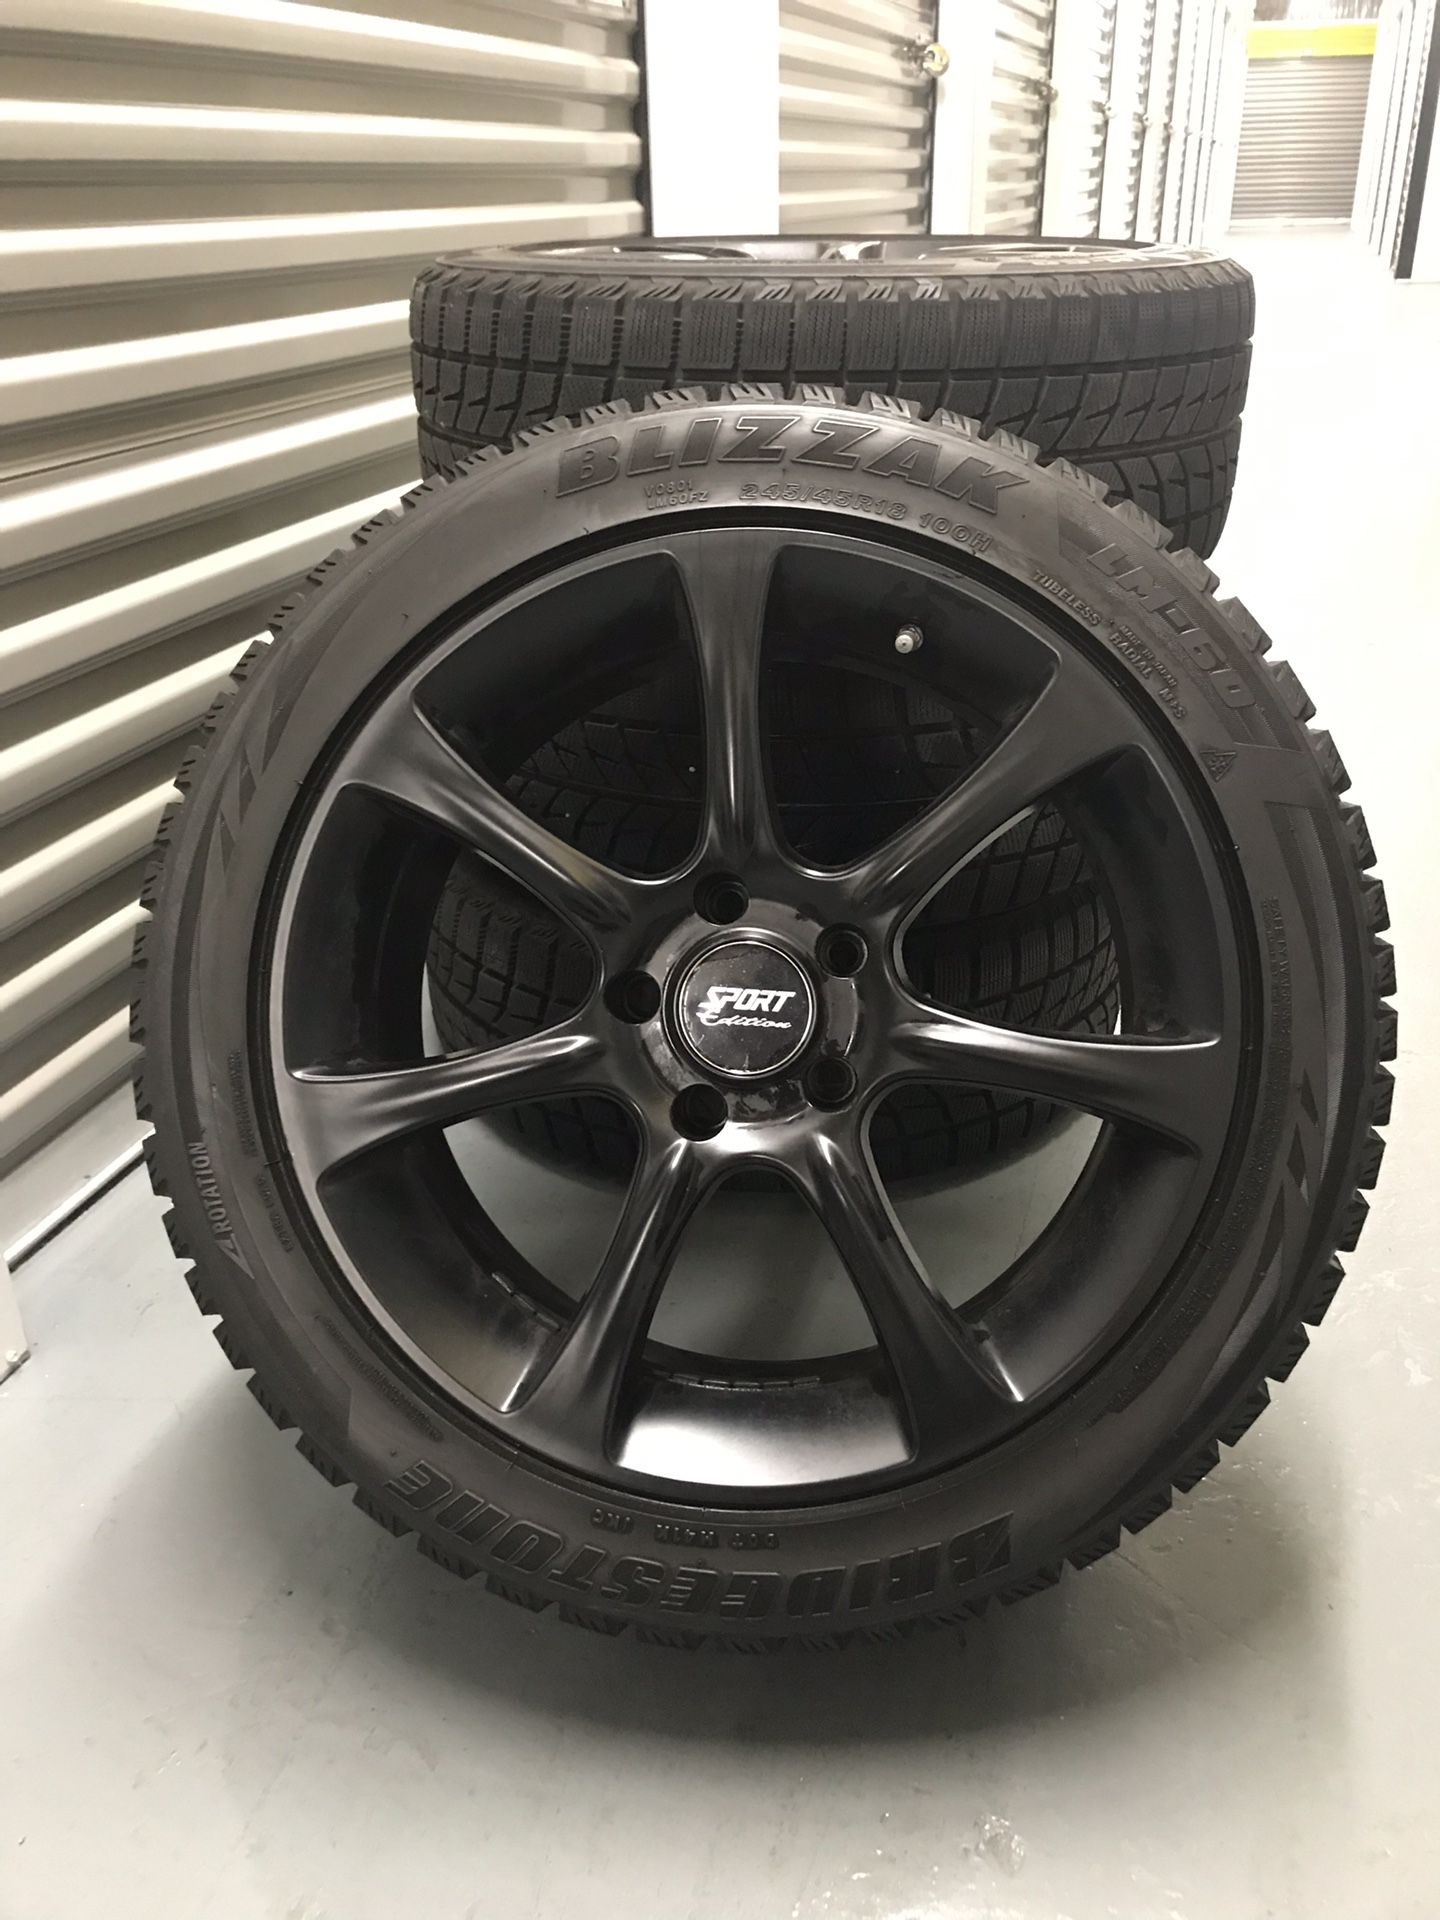 Blizzak winter tires w/ 18” rims - black